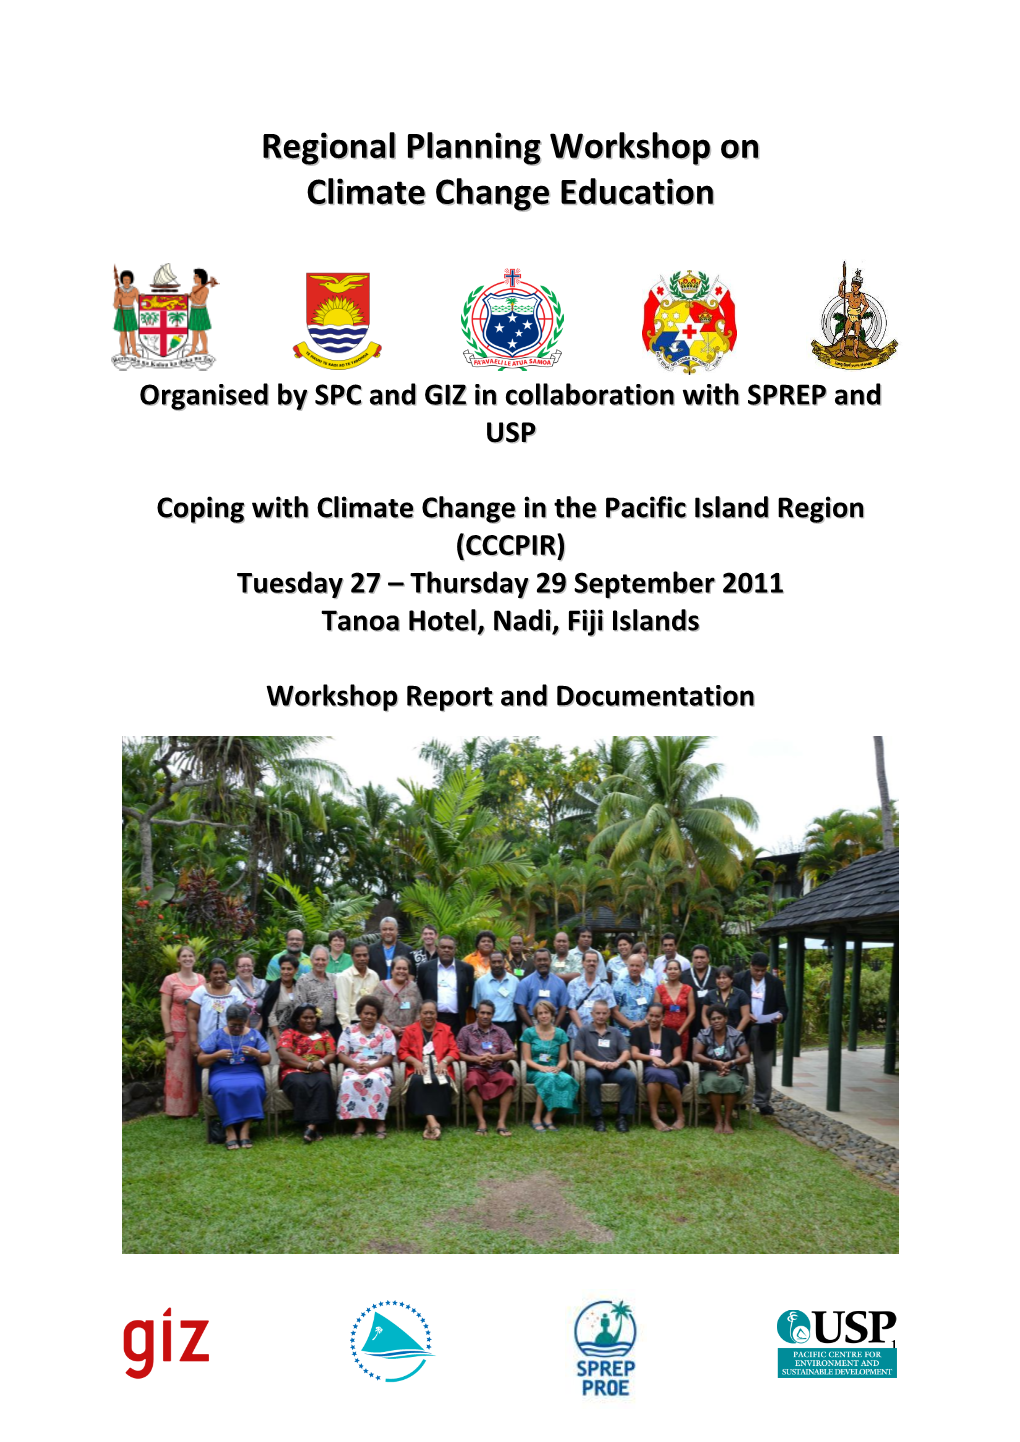 Regional Planning Workshop on Climate Change Education